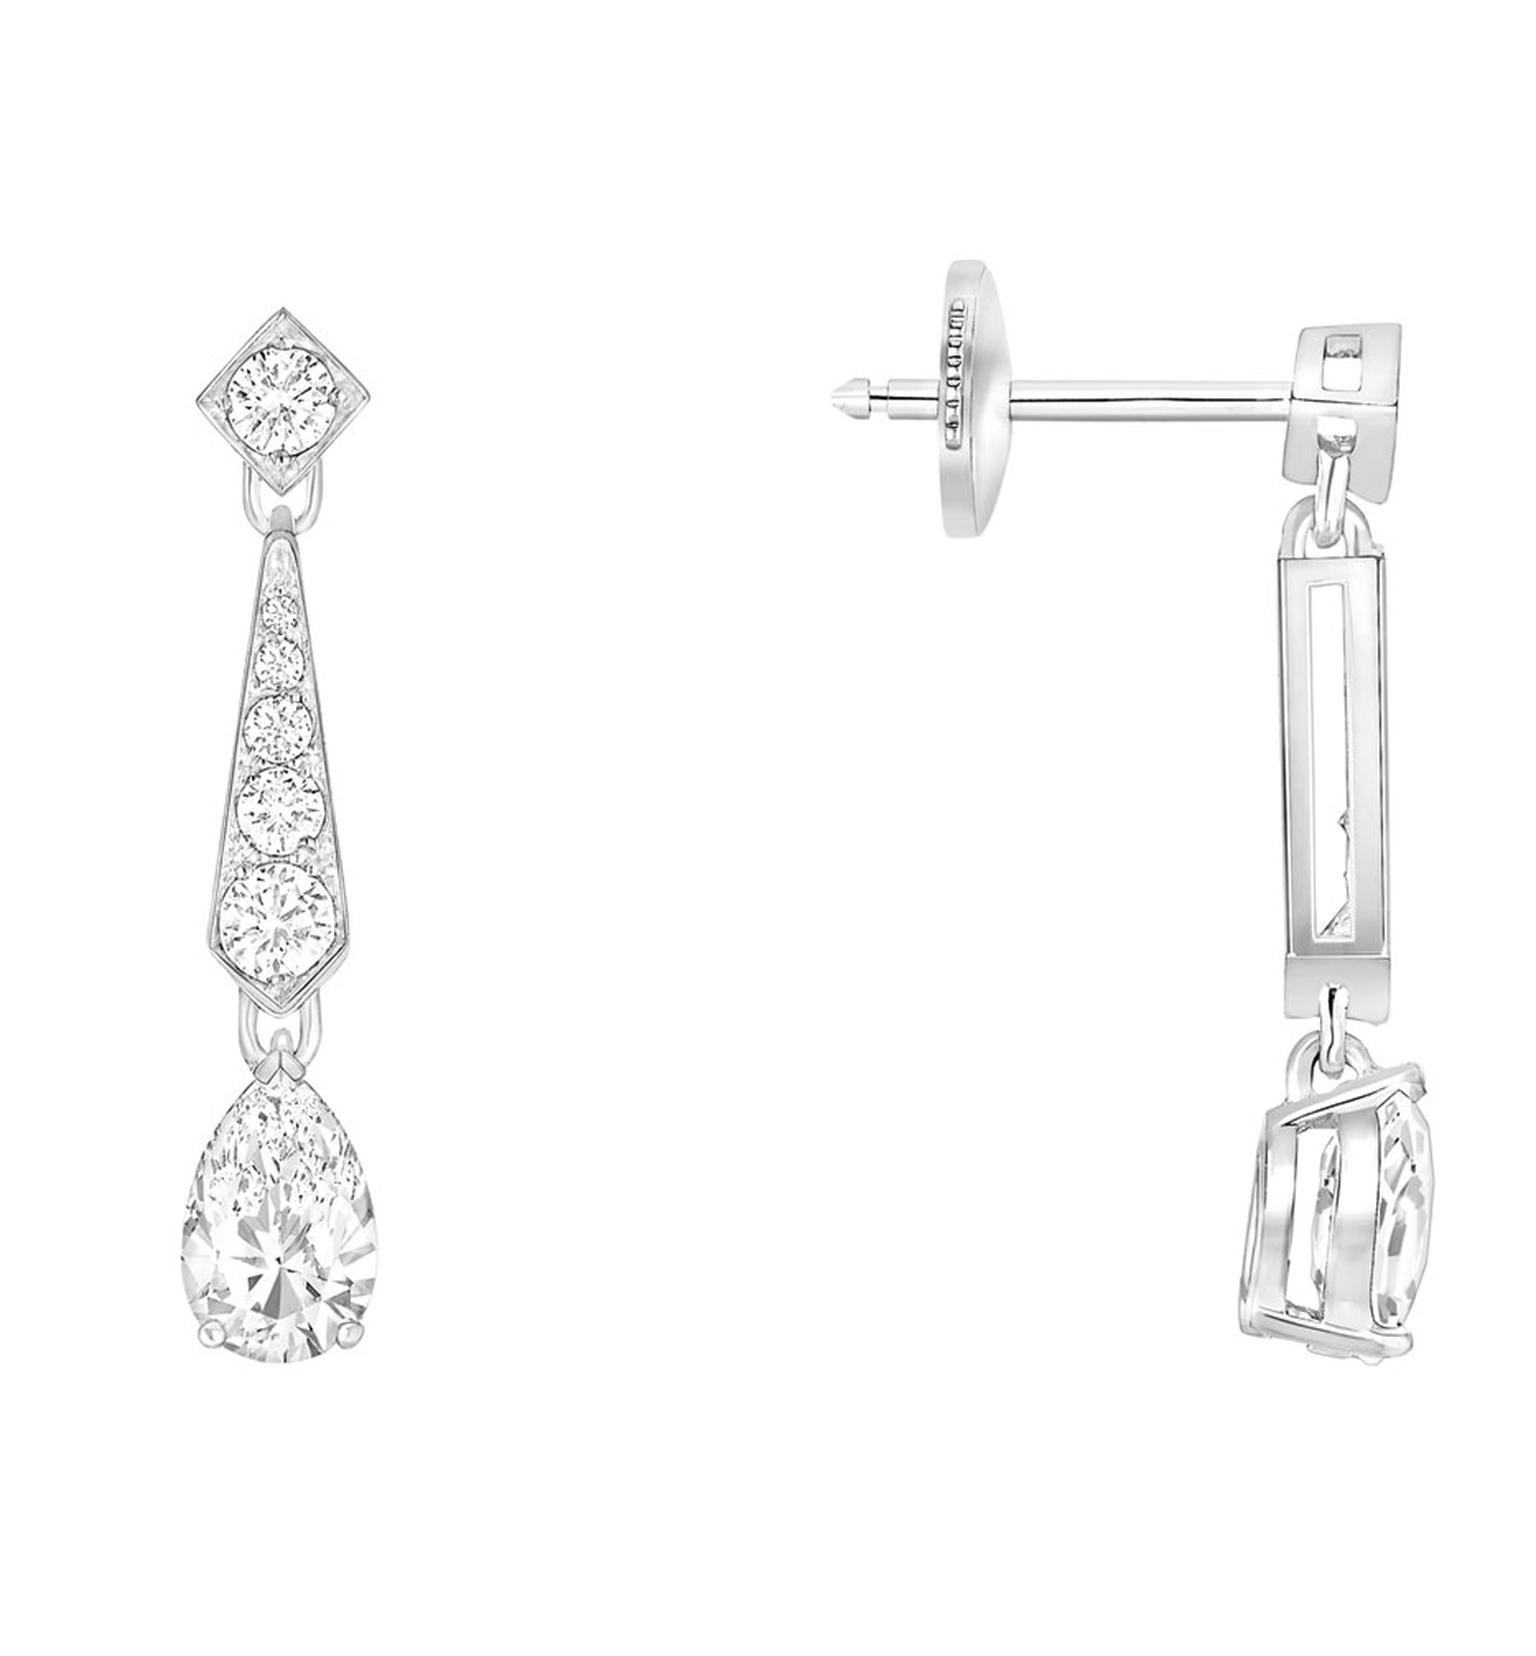 Joséphine Aube Printanière diamond earrings, Chaumet